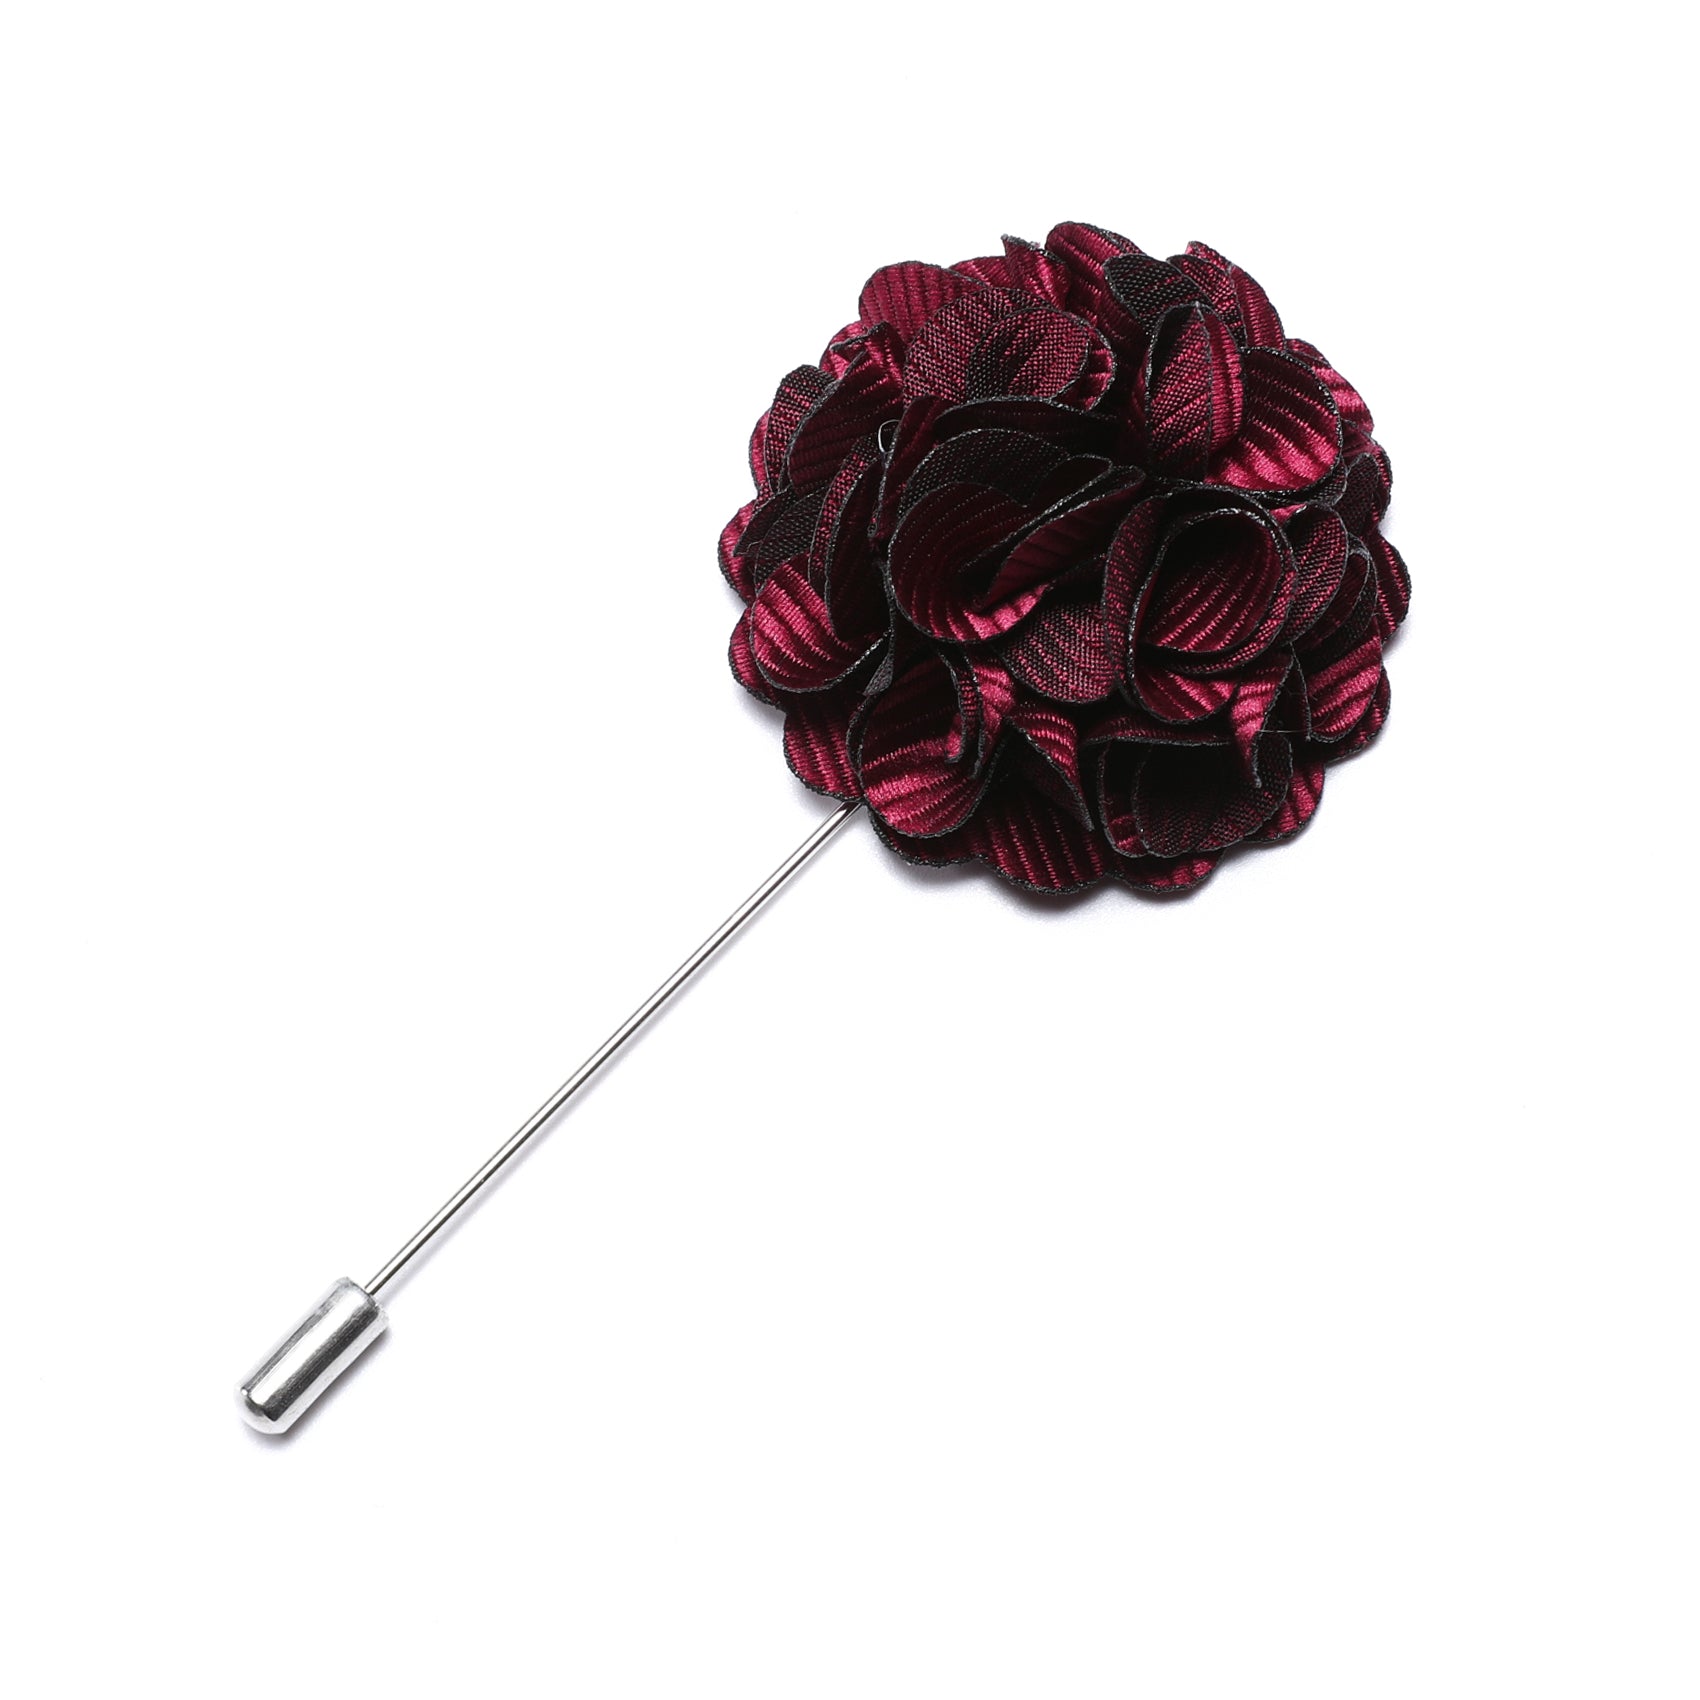 Barry.wang Men's Tie Accessories Luxury Dark Red Flower Lapel Pin